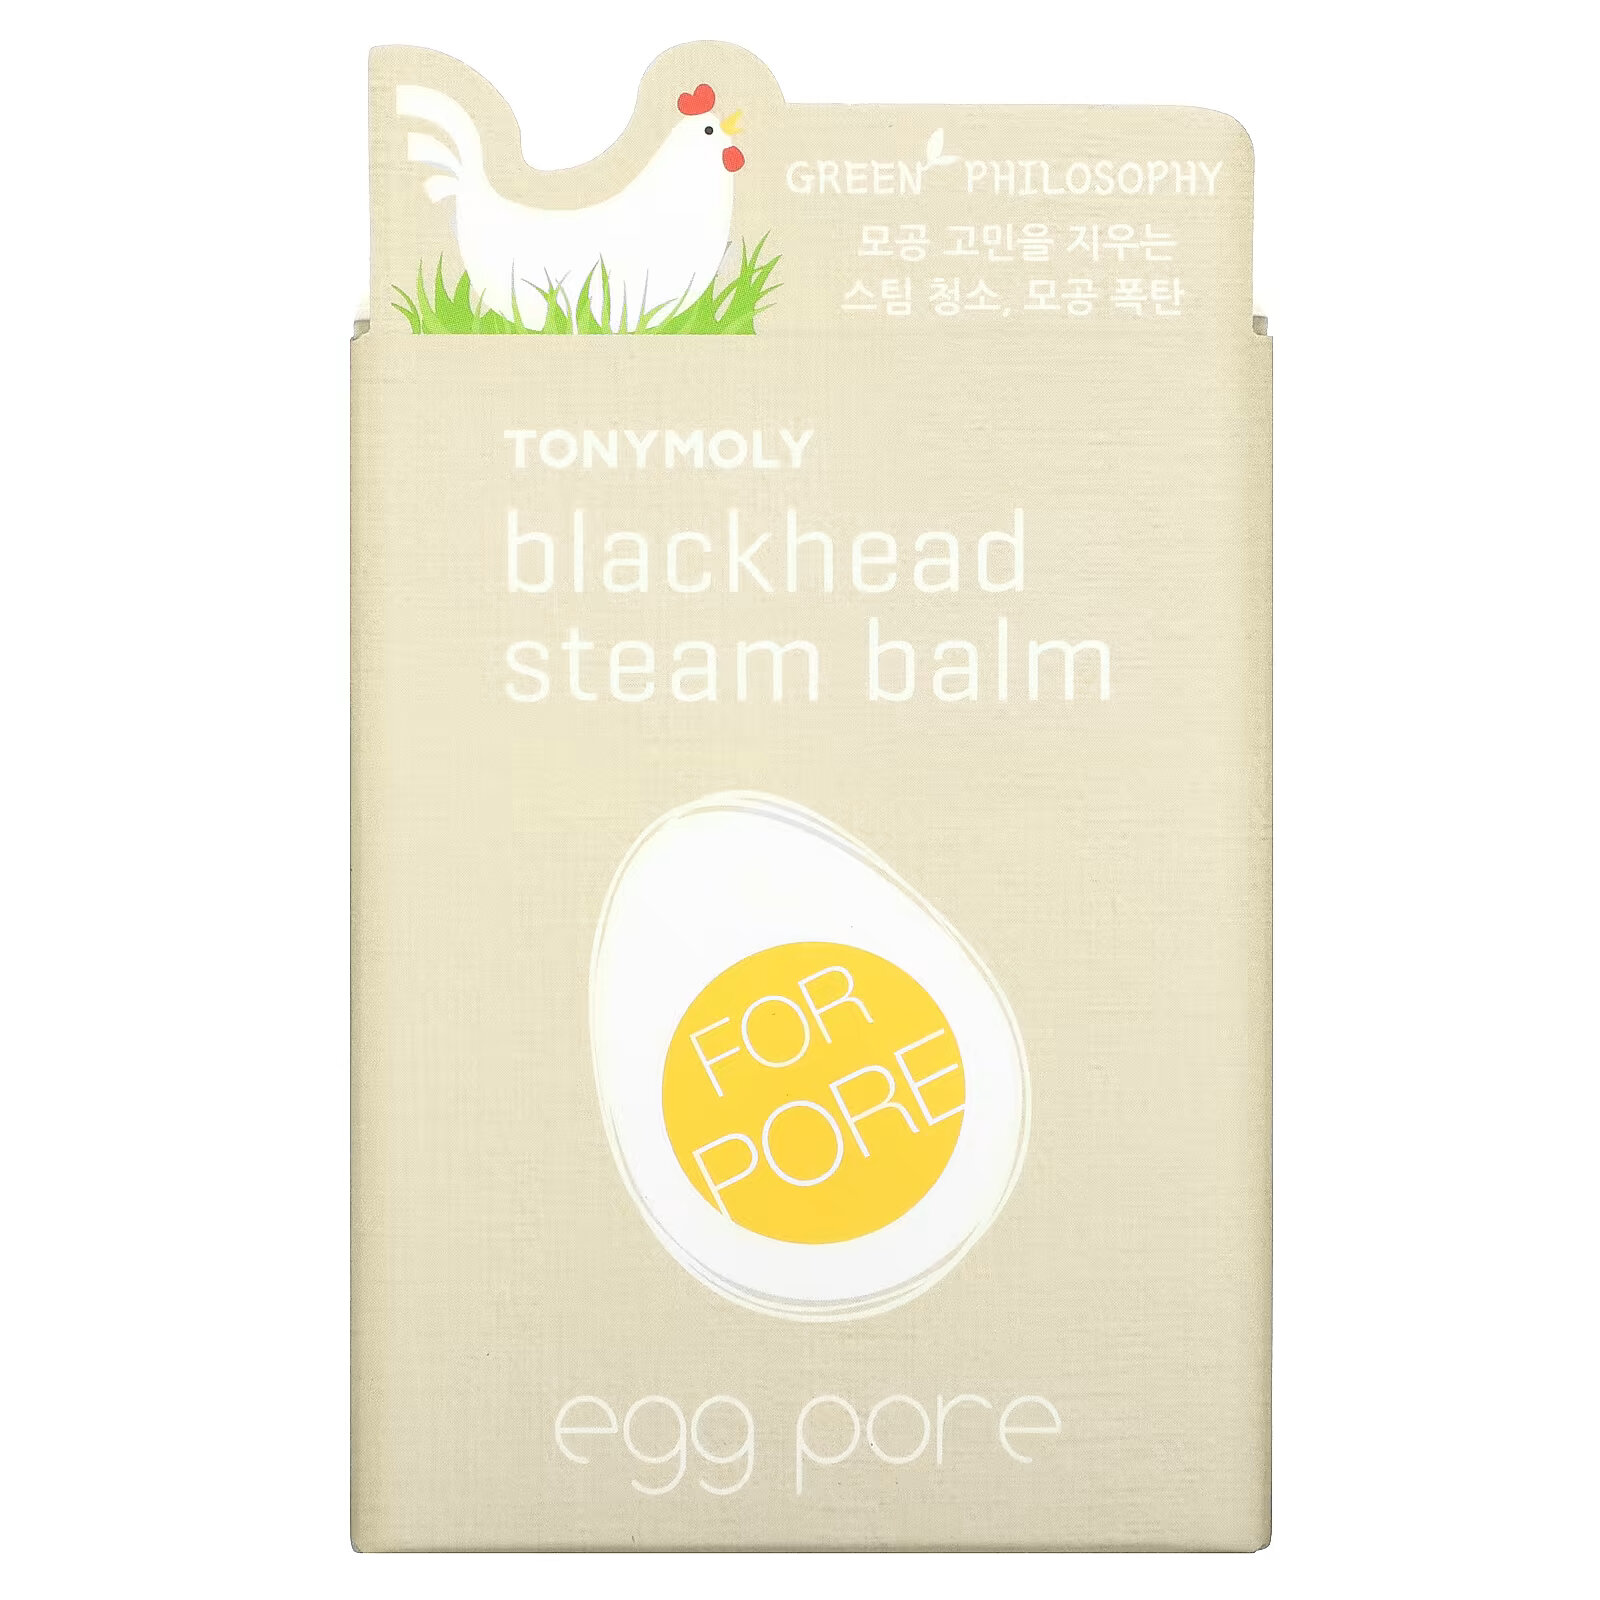 Blackhead steam balm egg pore как пользоваться фото 69